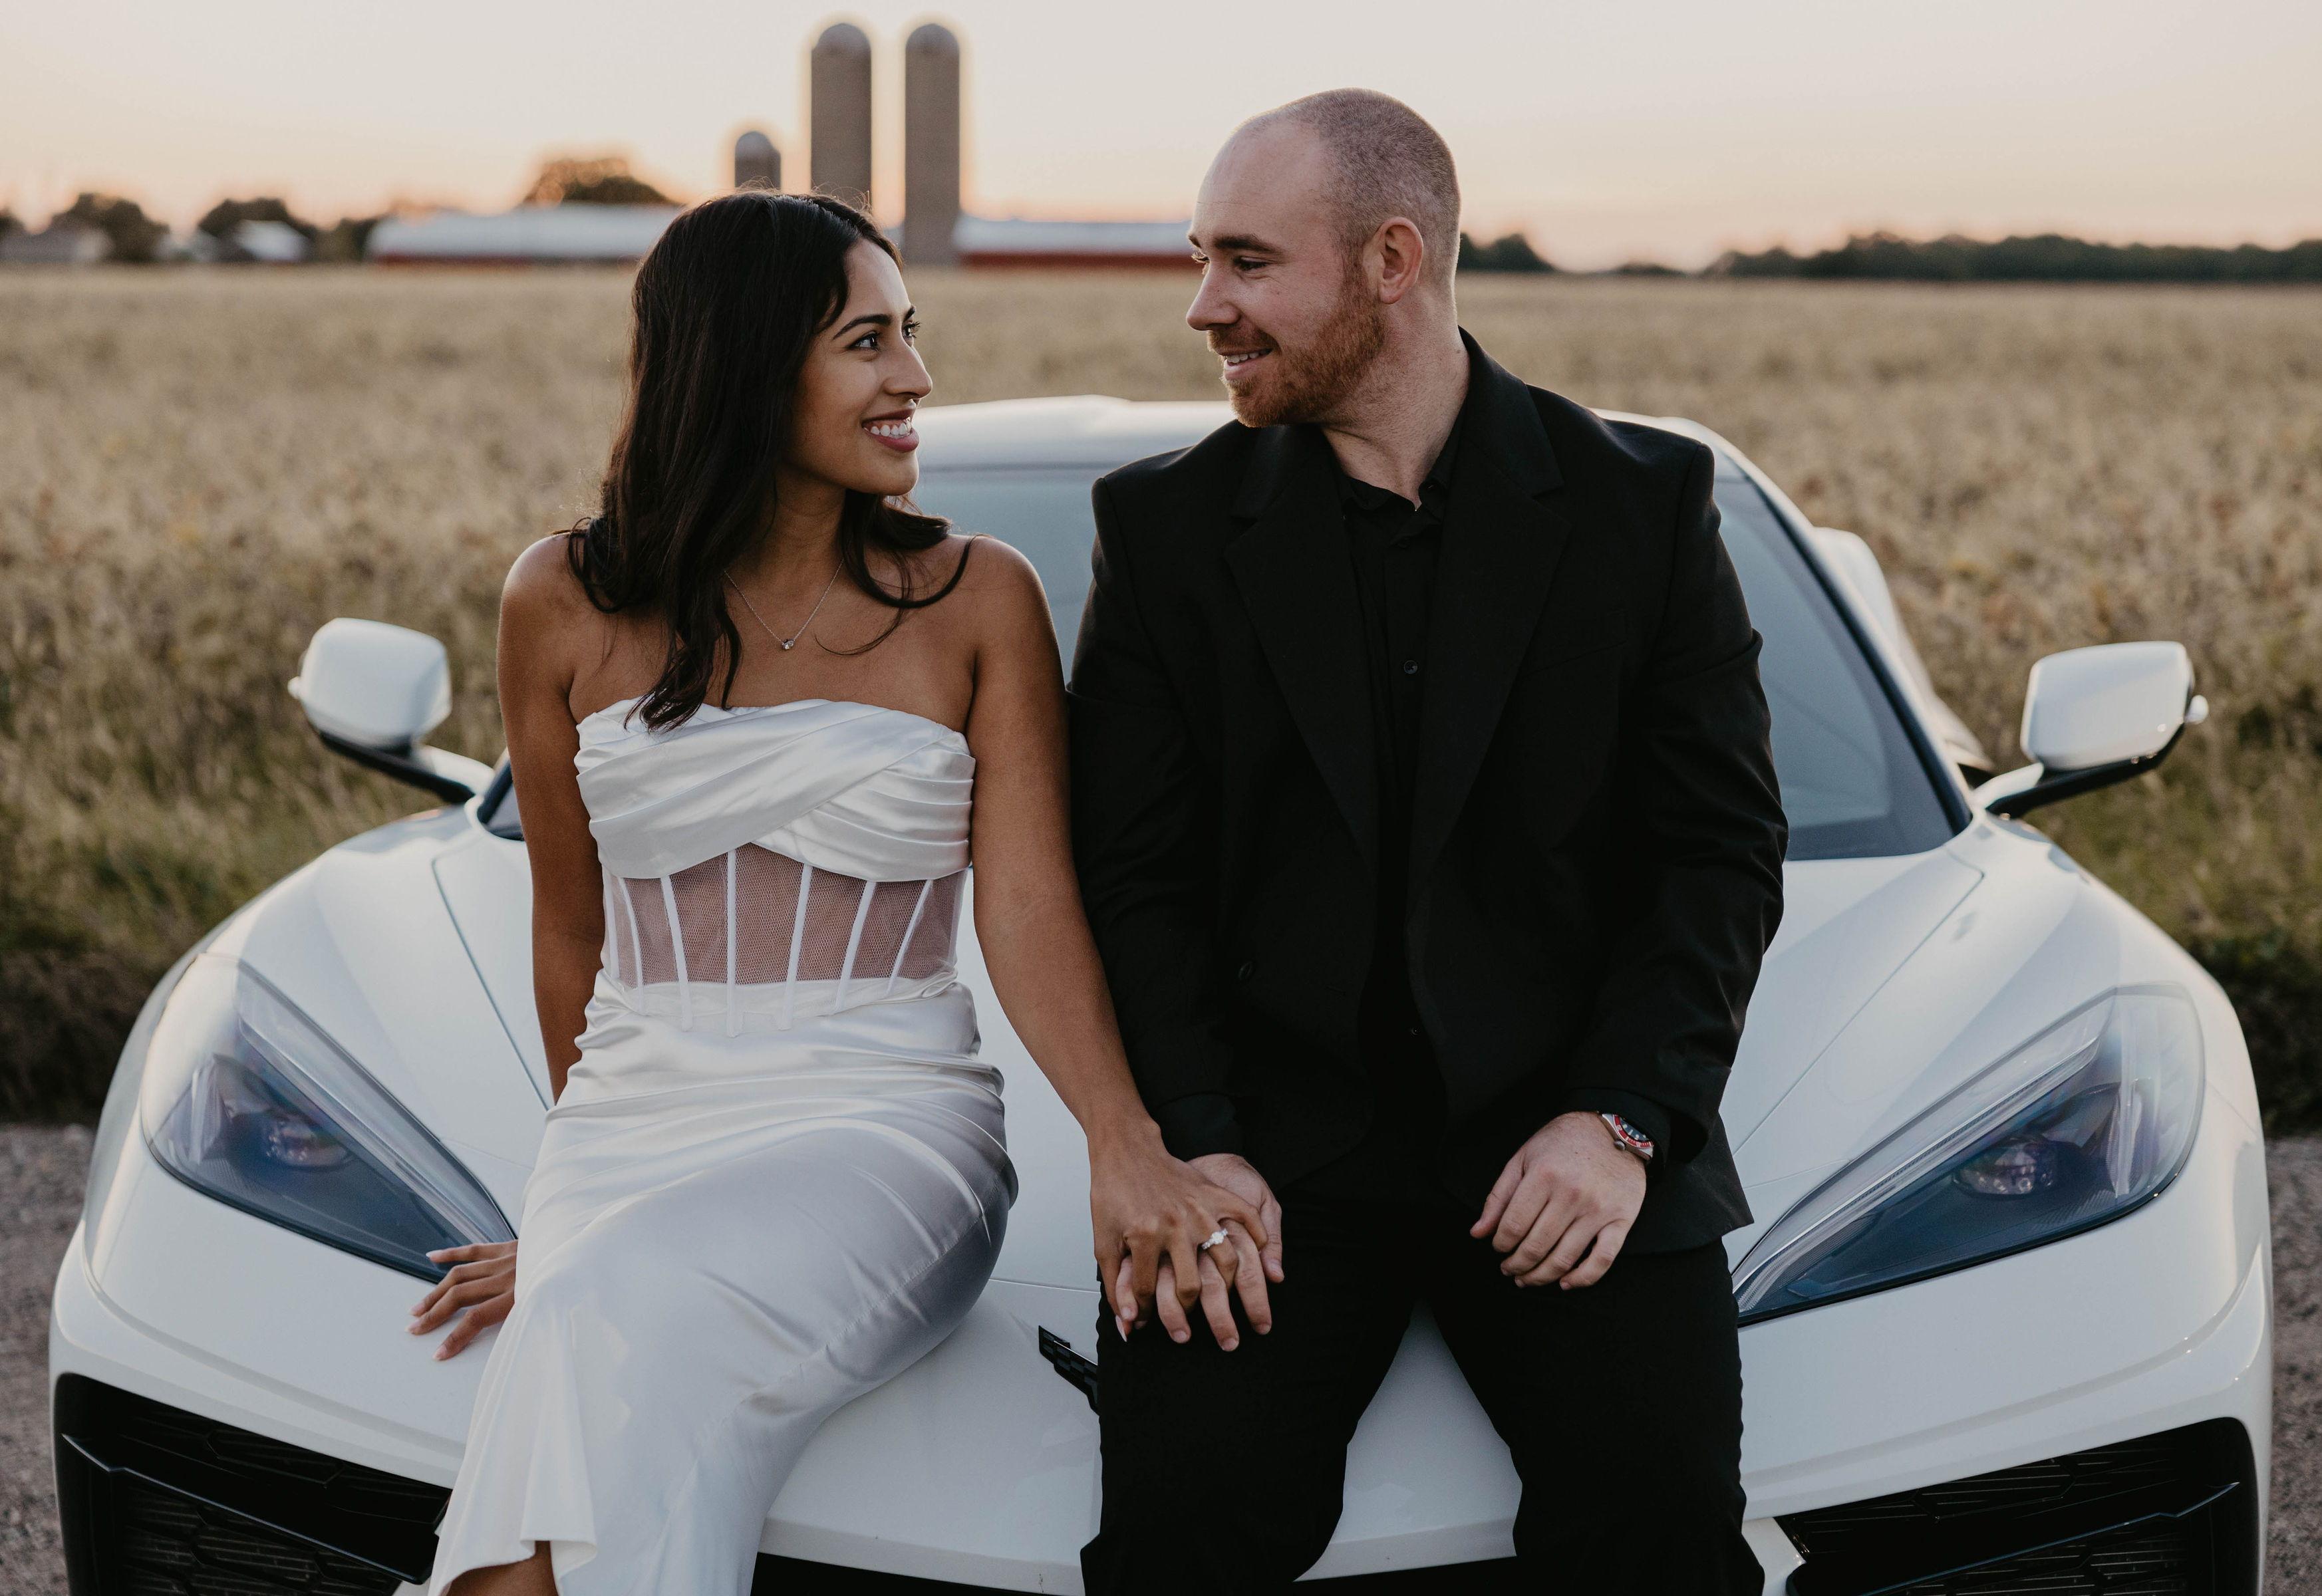 The Wedding Website of Alexandria Battaglia and Mitchell Francois